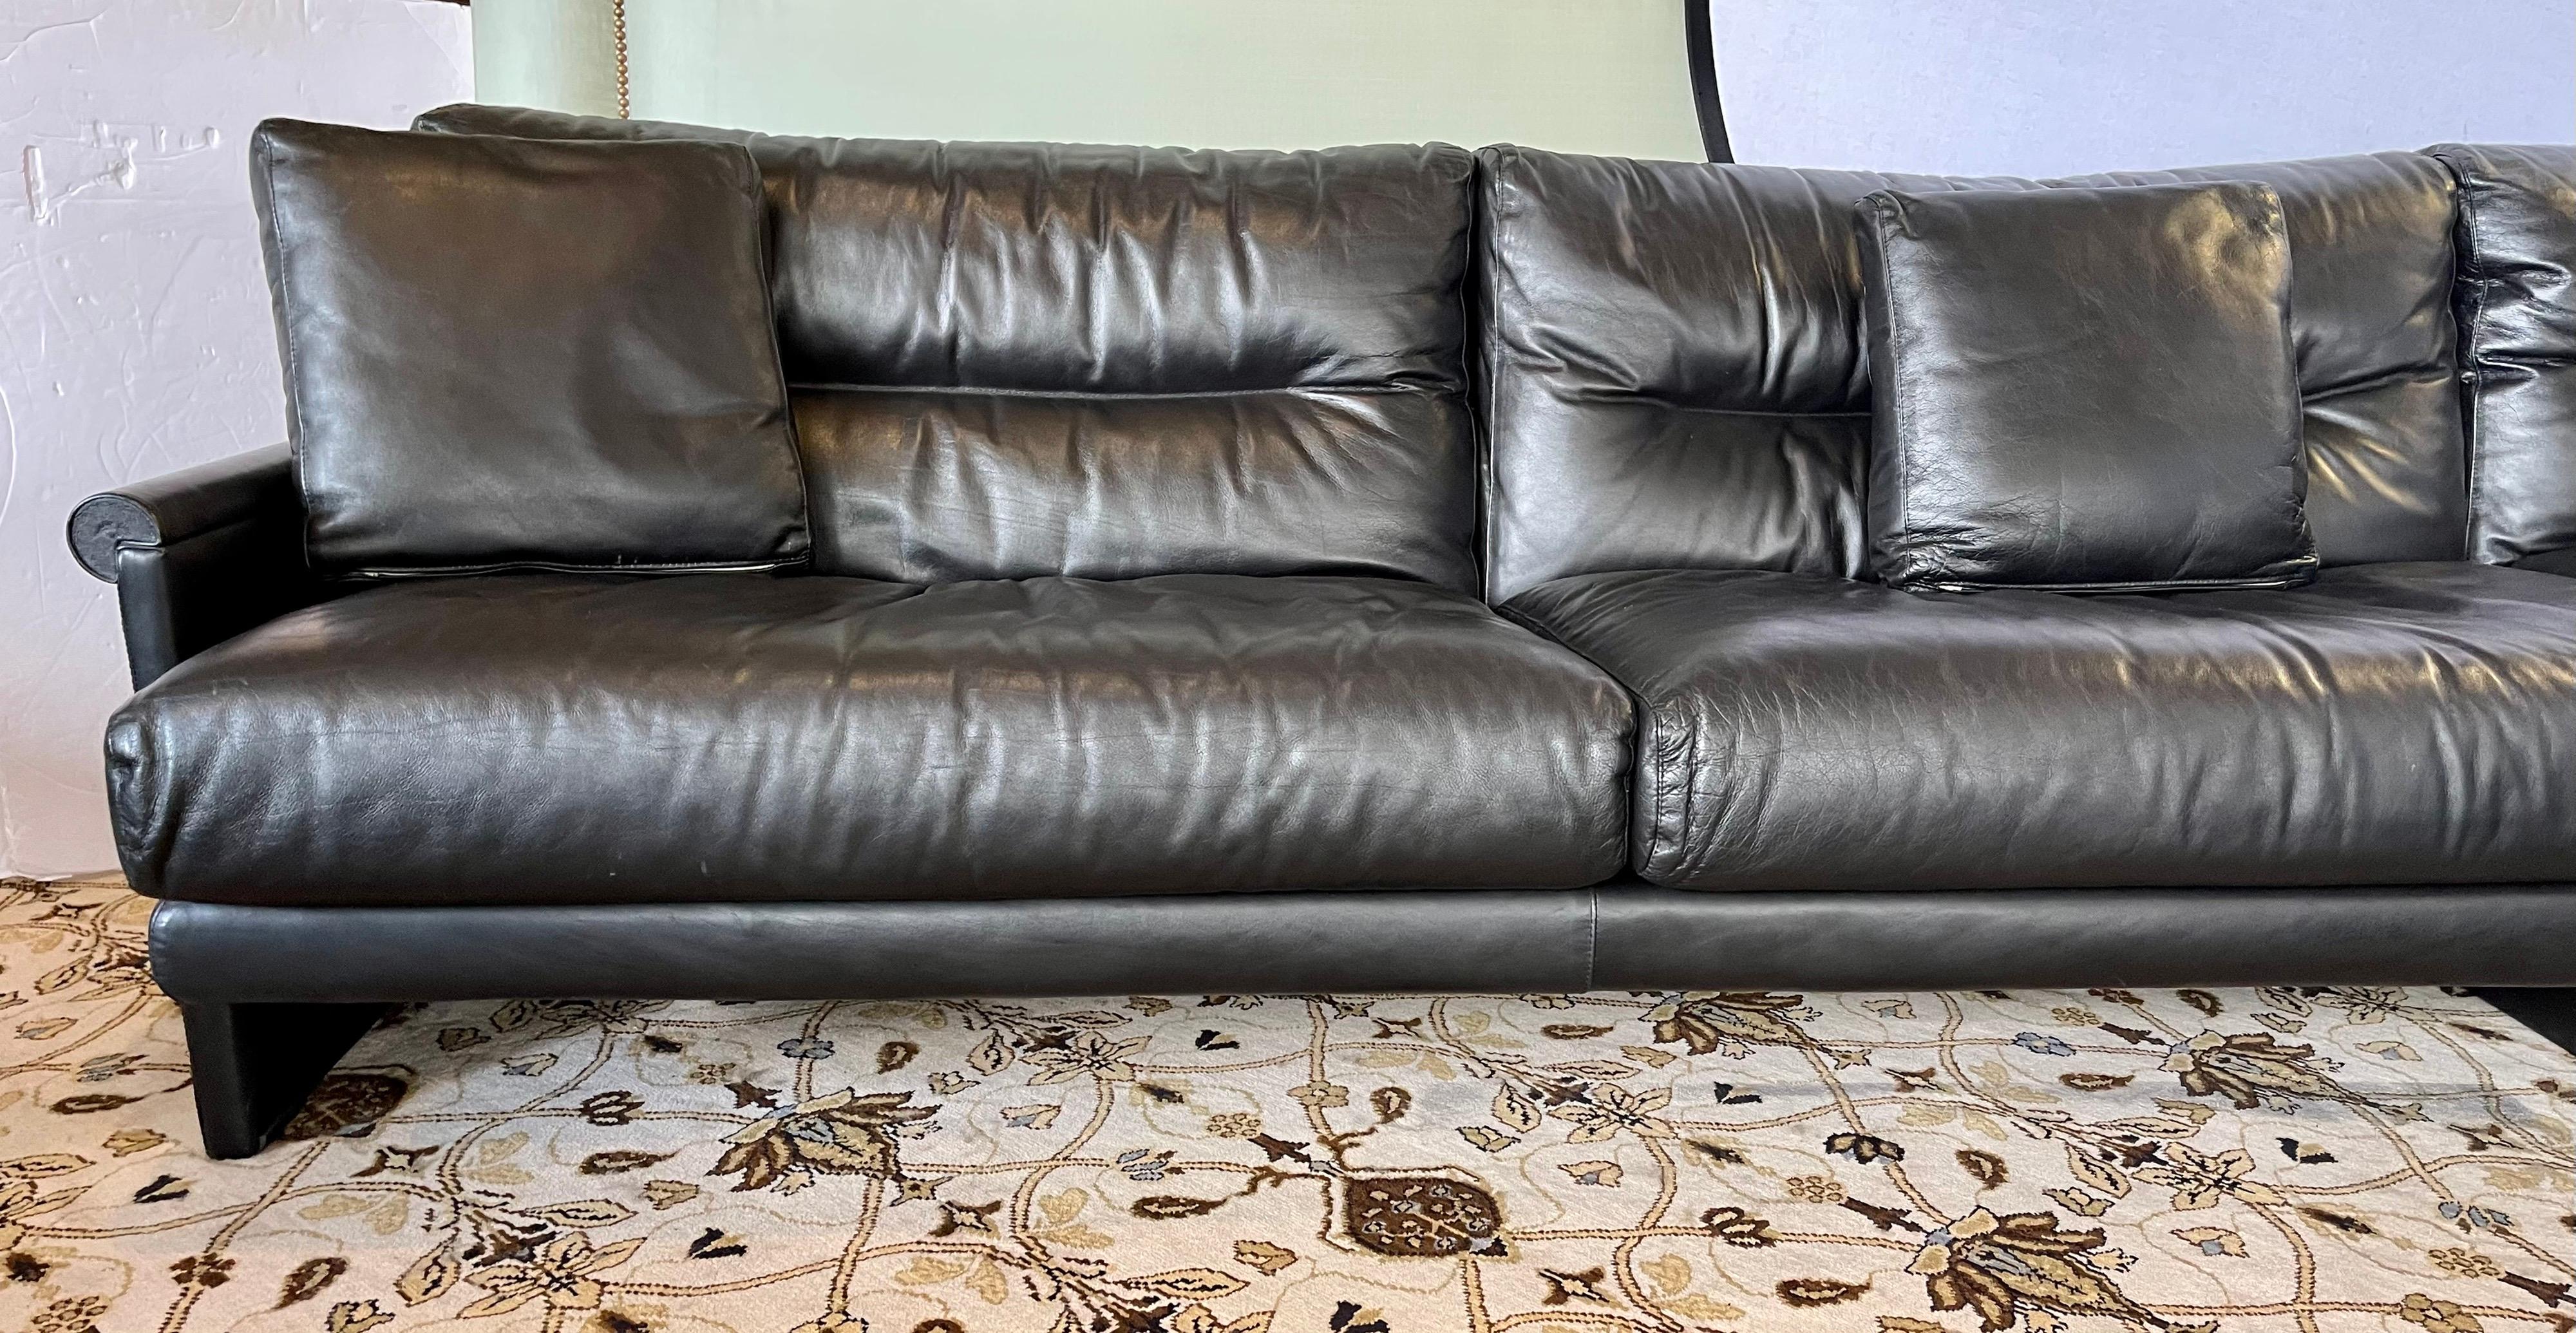 Italian Authentic Saporiti Italia Large Sleek Black Leather Sofa Sectional Made in Italy